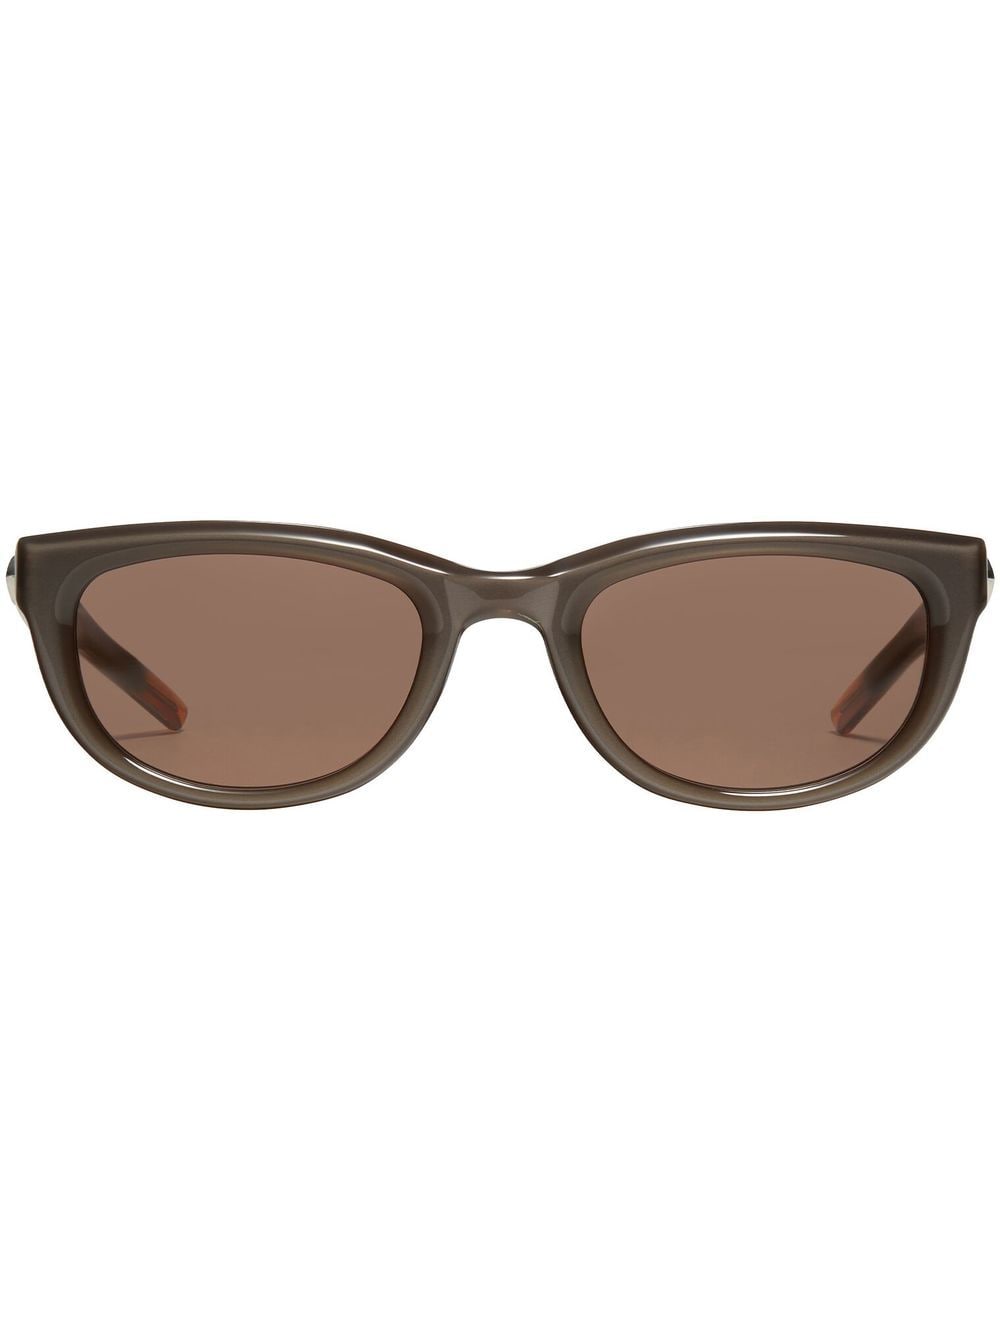 oval-frame sunglasses